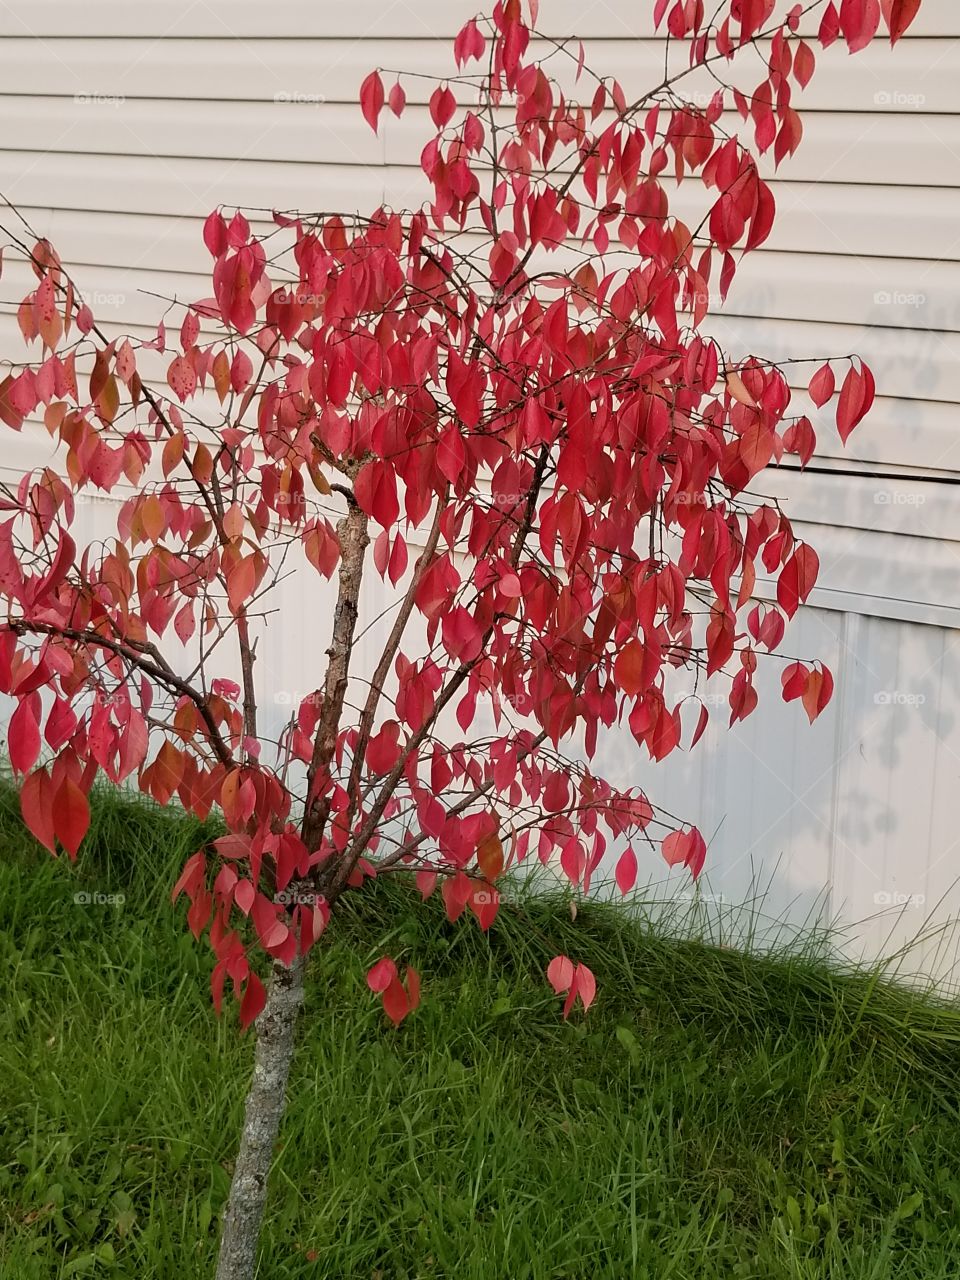 beatful  tree in the fall